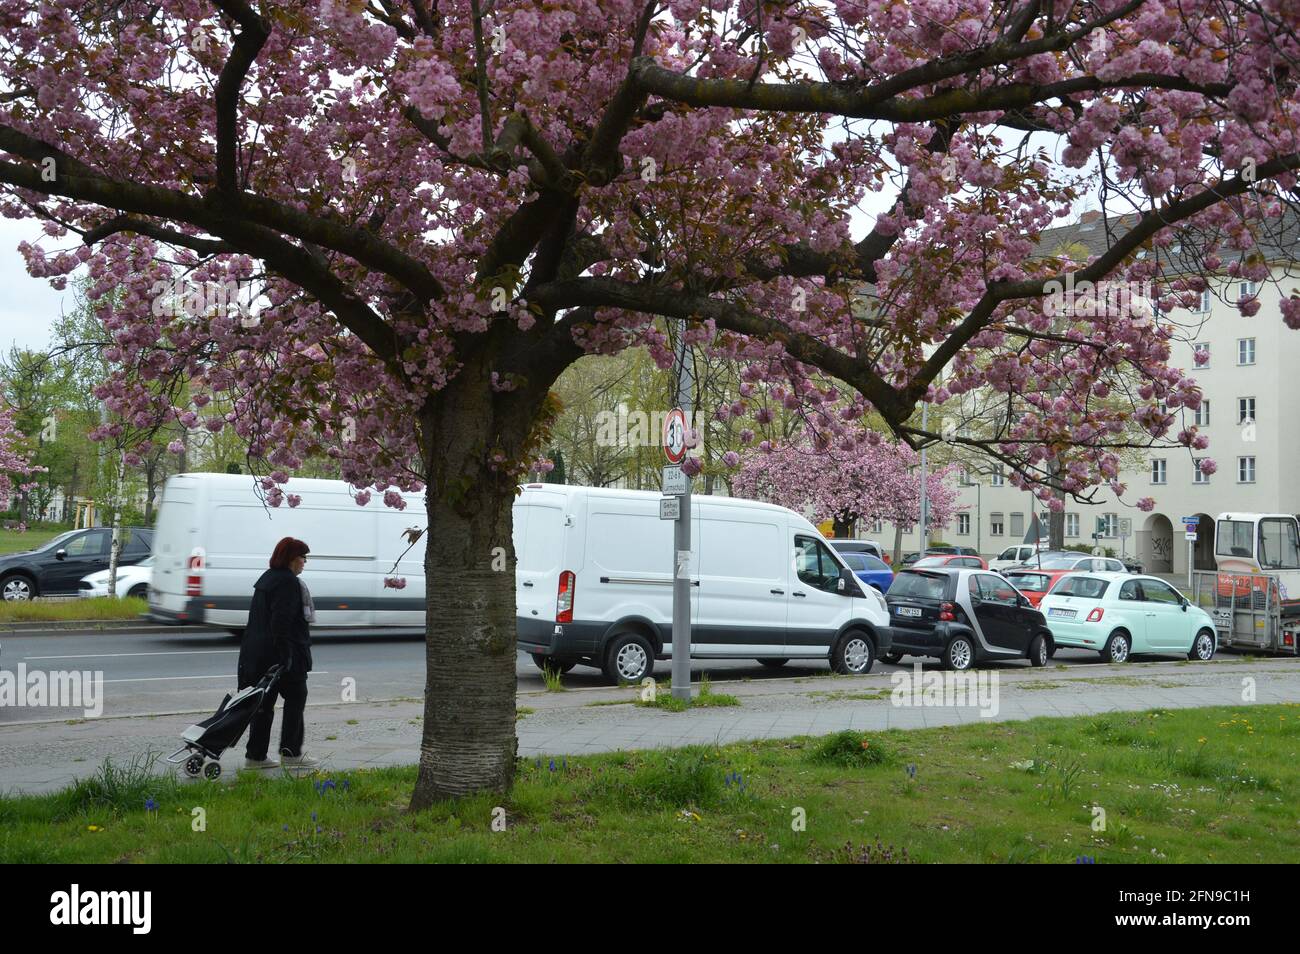 May 2021 - Cherry blossoms at Grazer Platz in Berlin, Germany Stock Photo